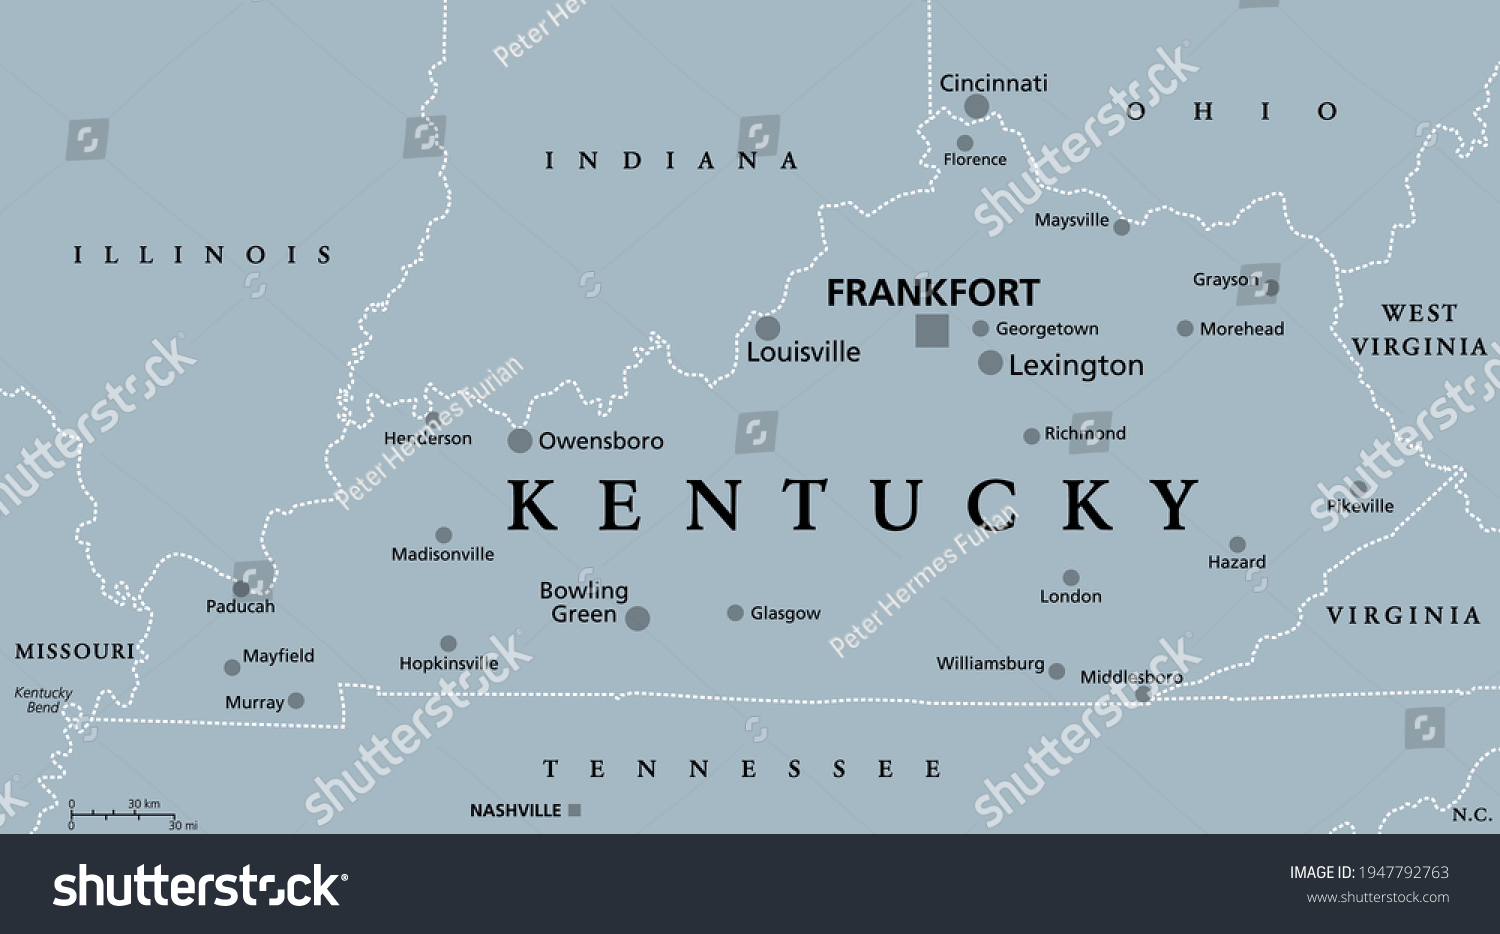 Kentucky Ky Gray Political Map Capital Stock Vector Royalty Free 1947792763 Shutterstock 3503